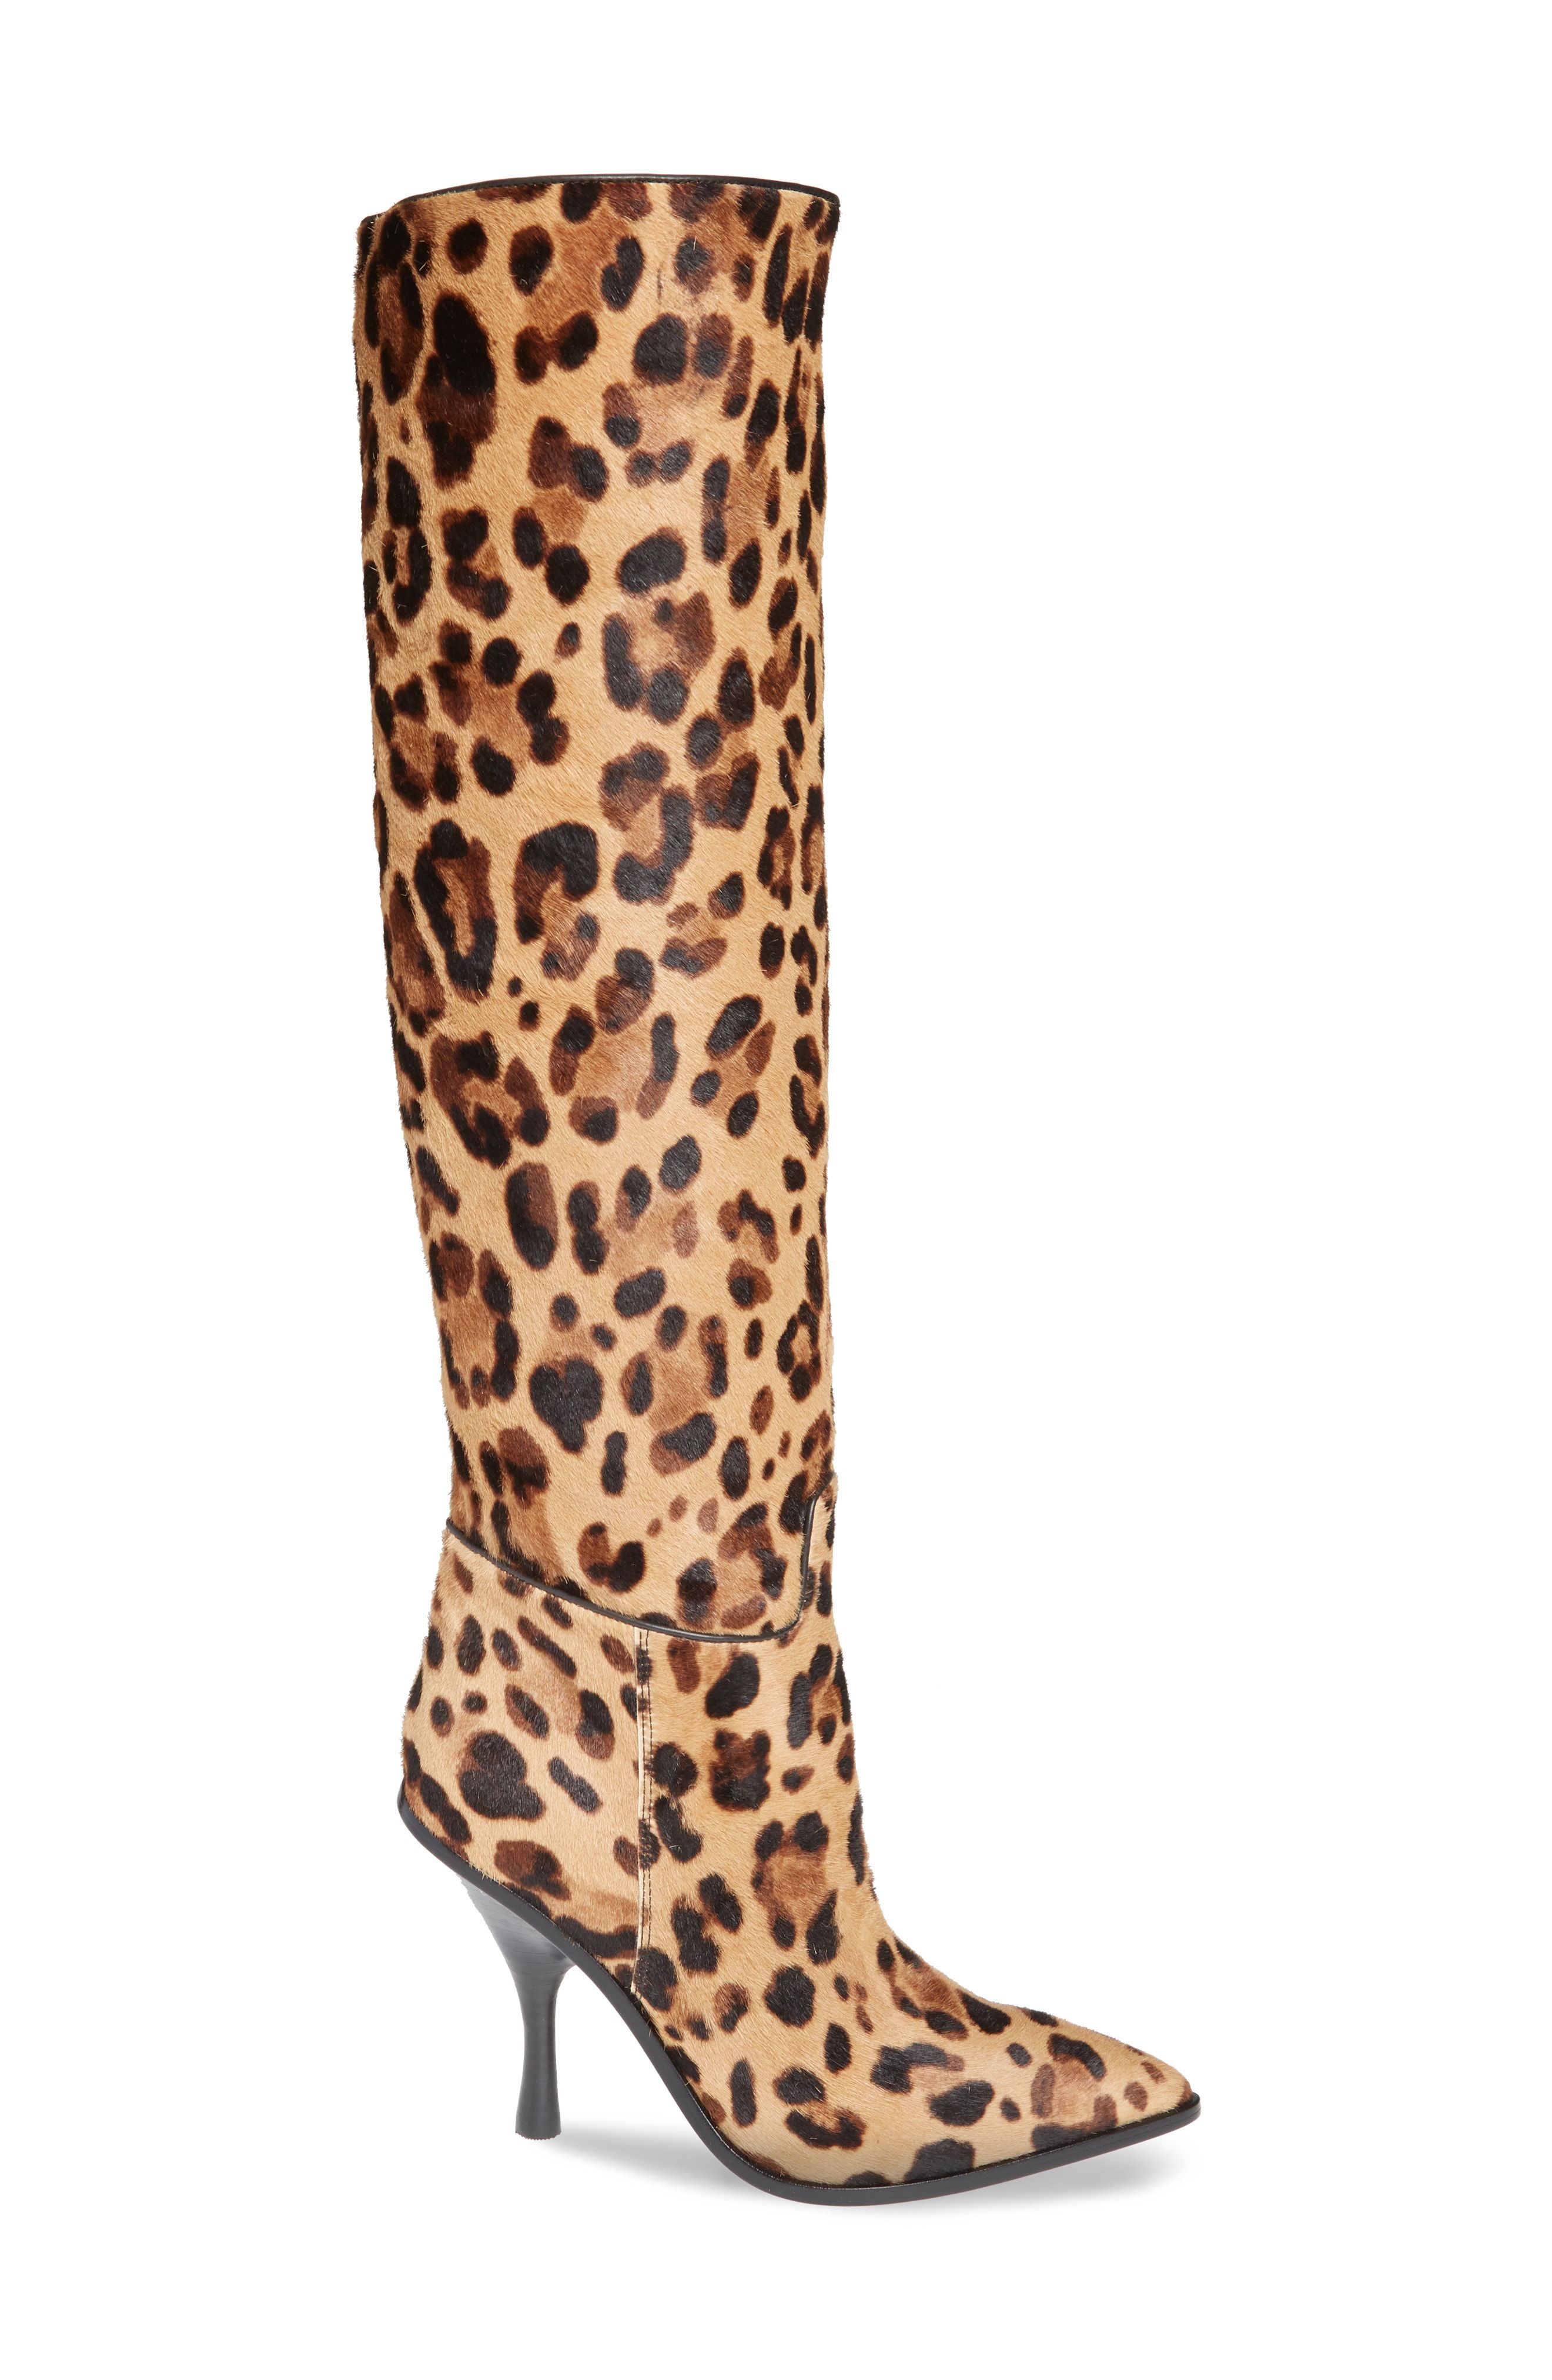 leopard skin knee high boots